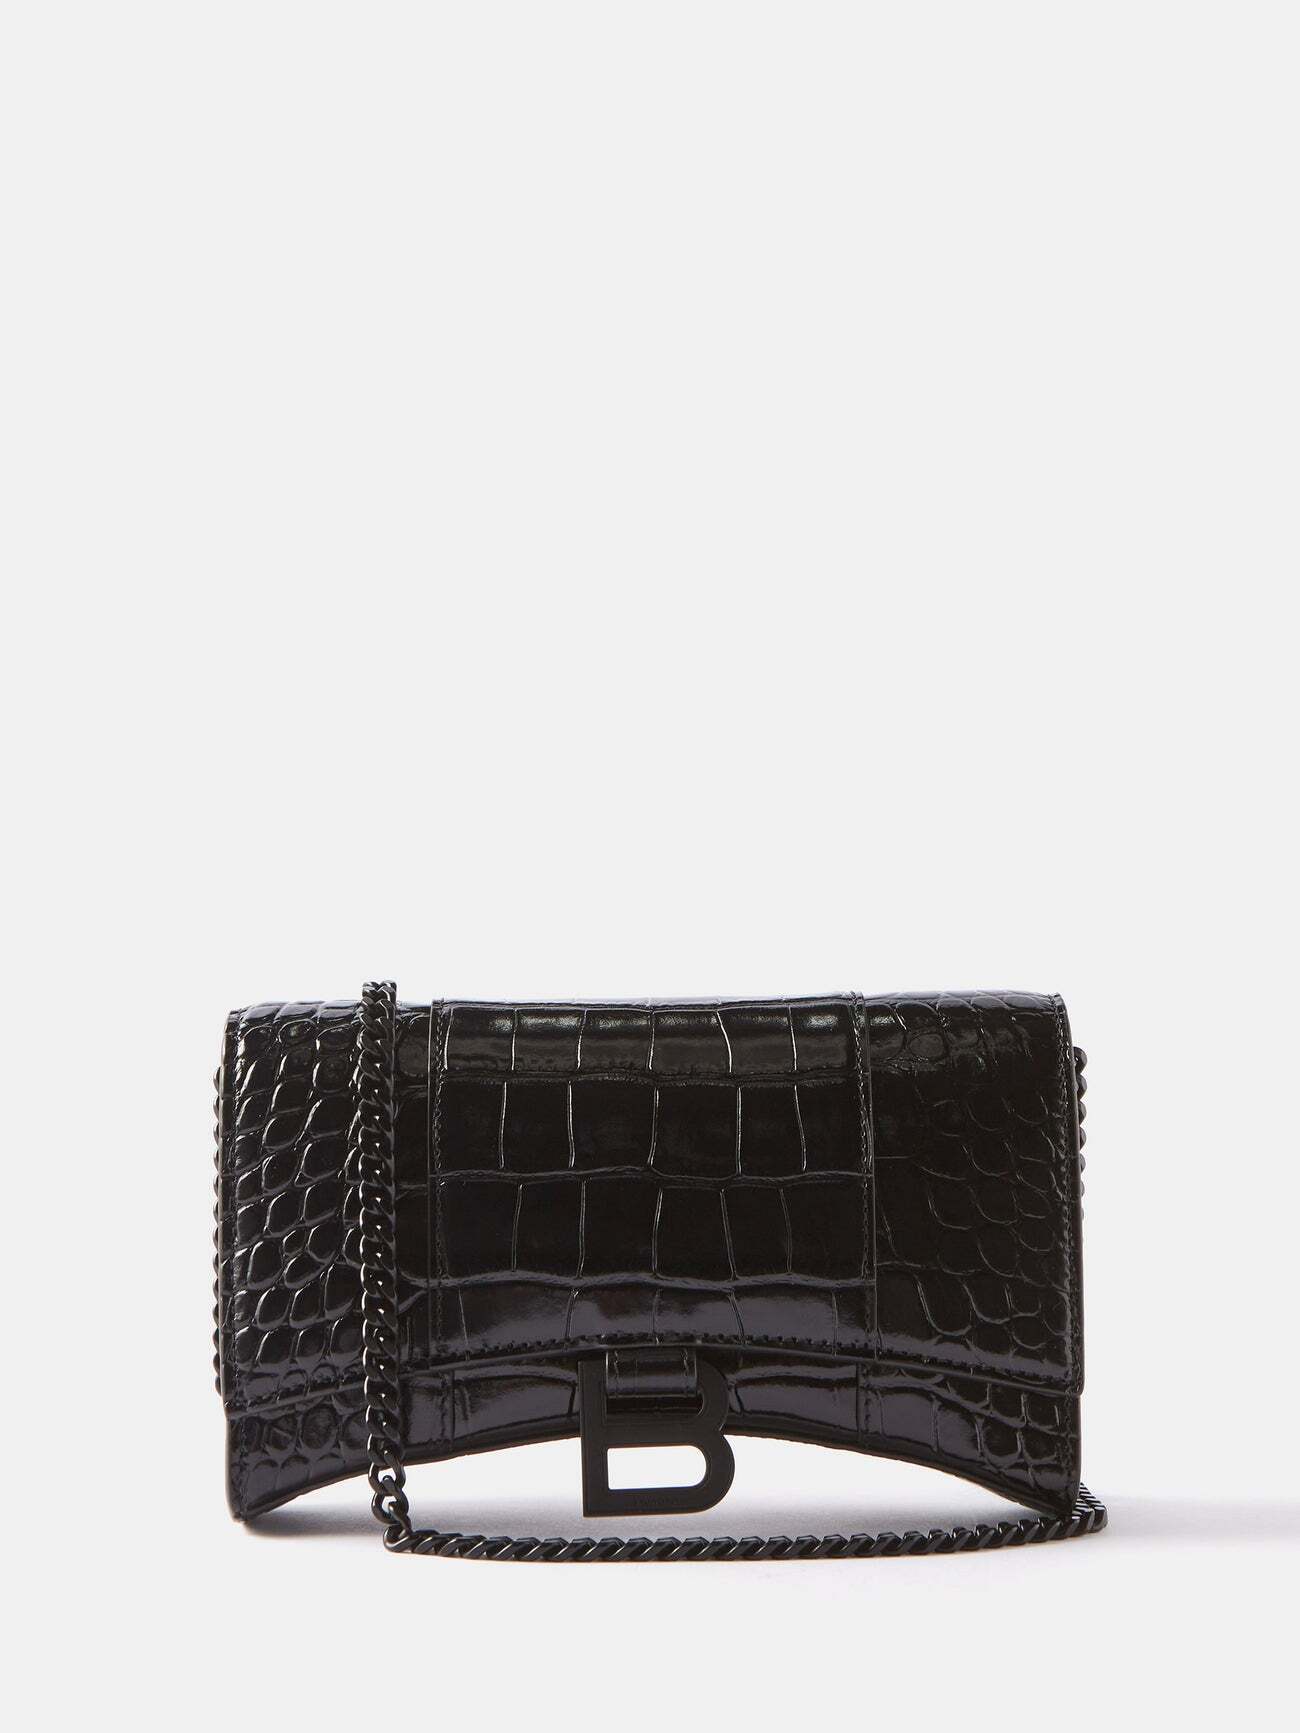 Balenciaga - Hourglass Croc-effect Leather Cross-body Bag - Womens - Black